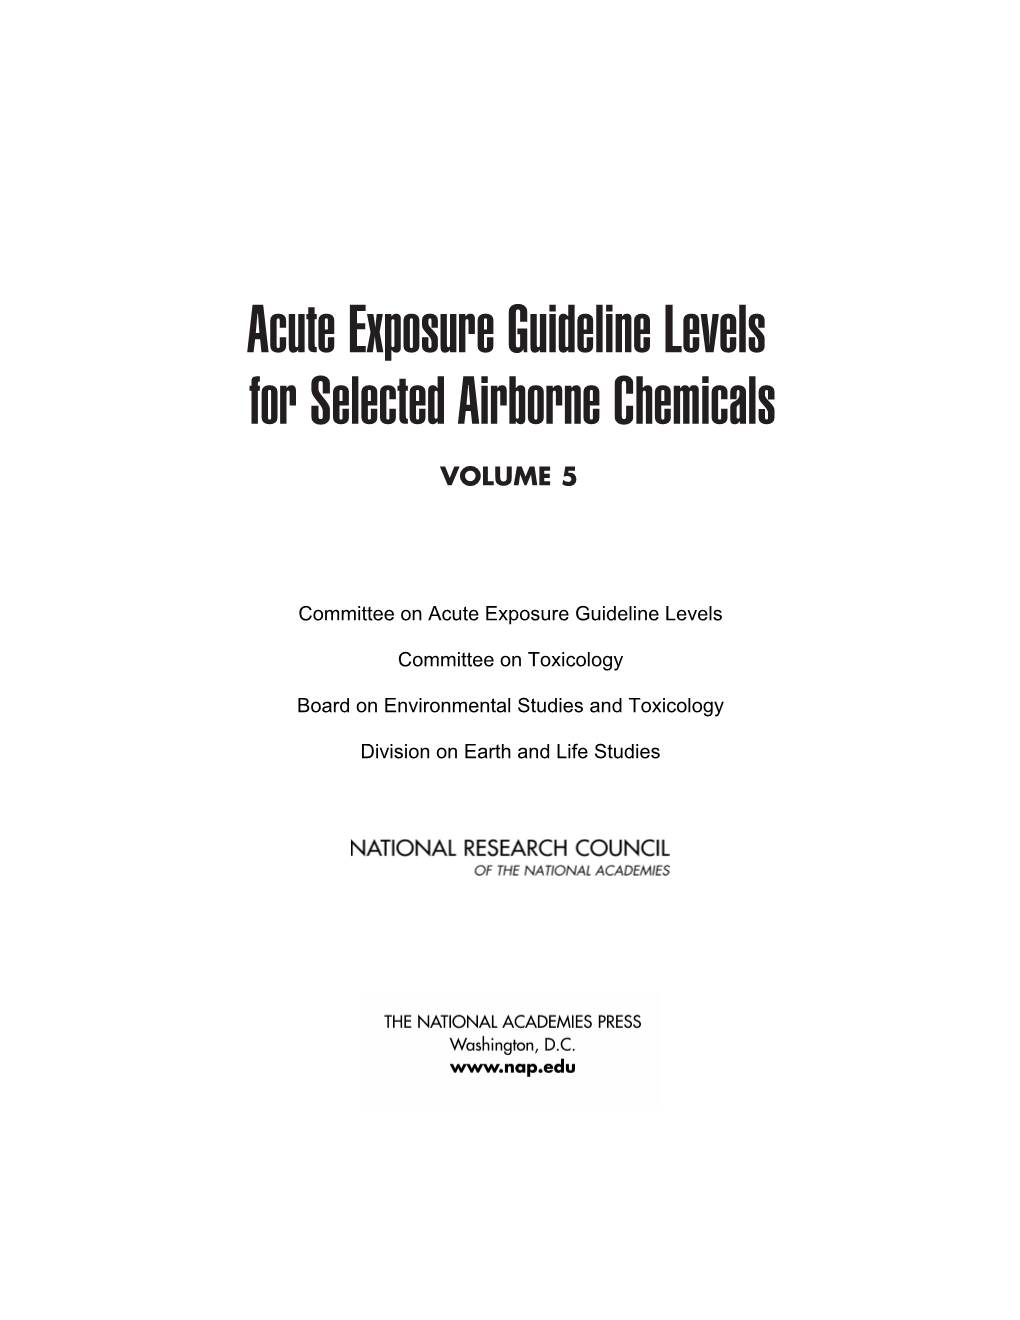 Cyclohexylamine Final AEGL Document